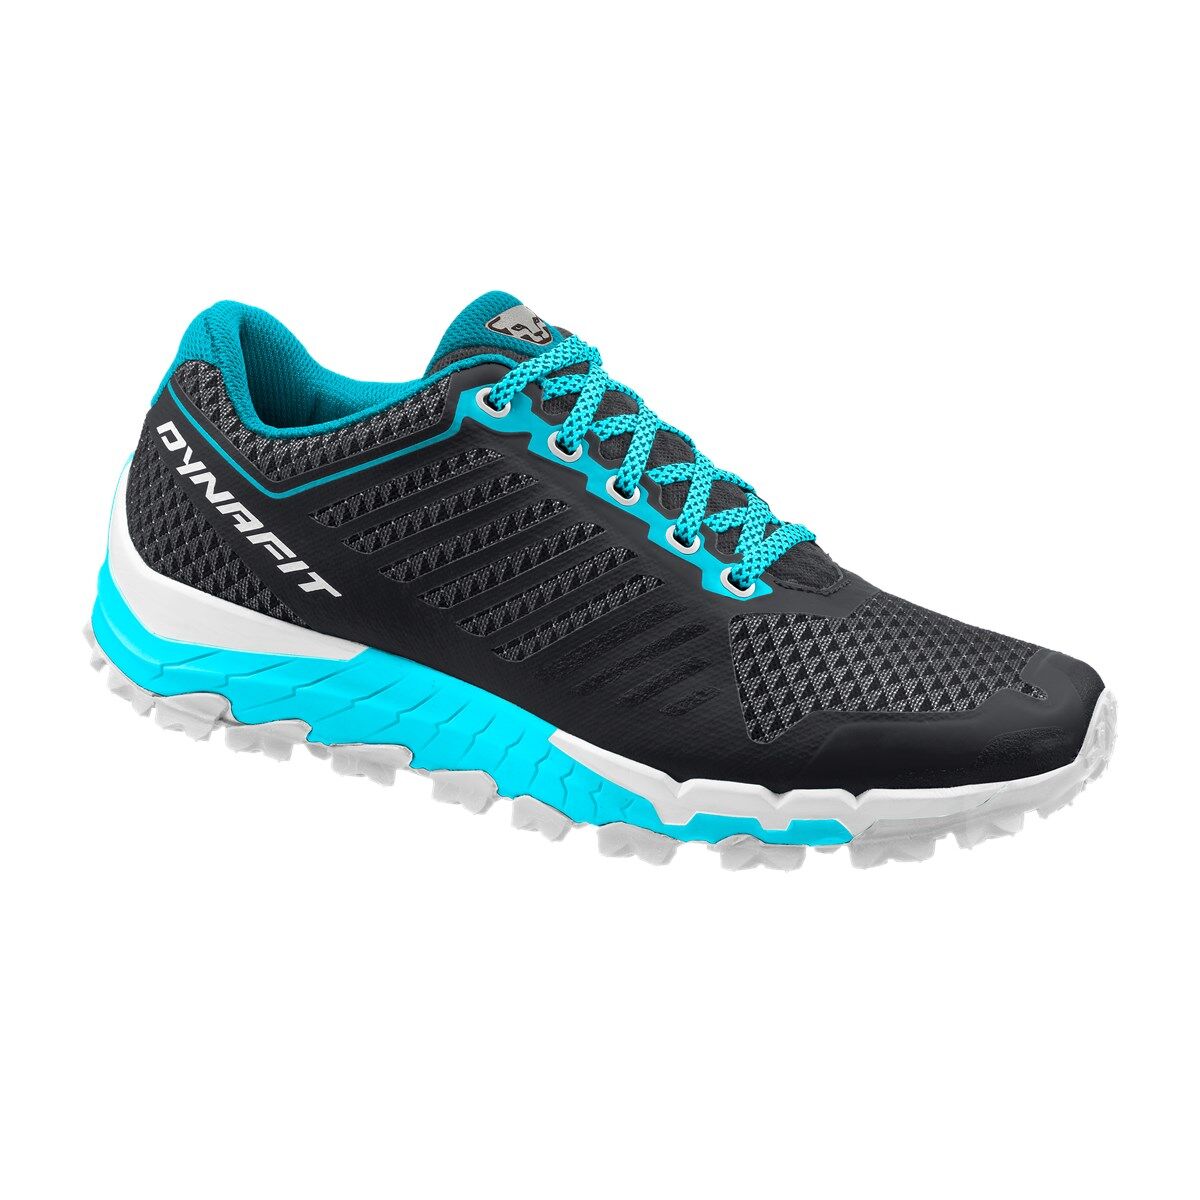 Dynafit - Trailbreaker - Trail Running shoes - Women's